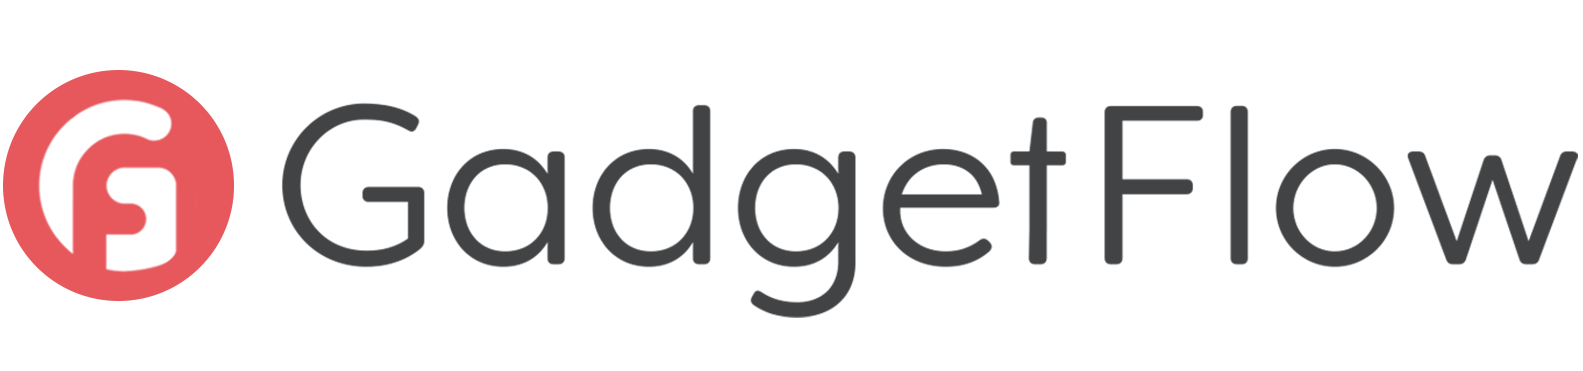 Gadget Flow Logo Main2